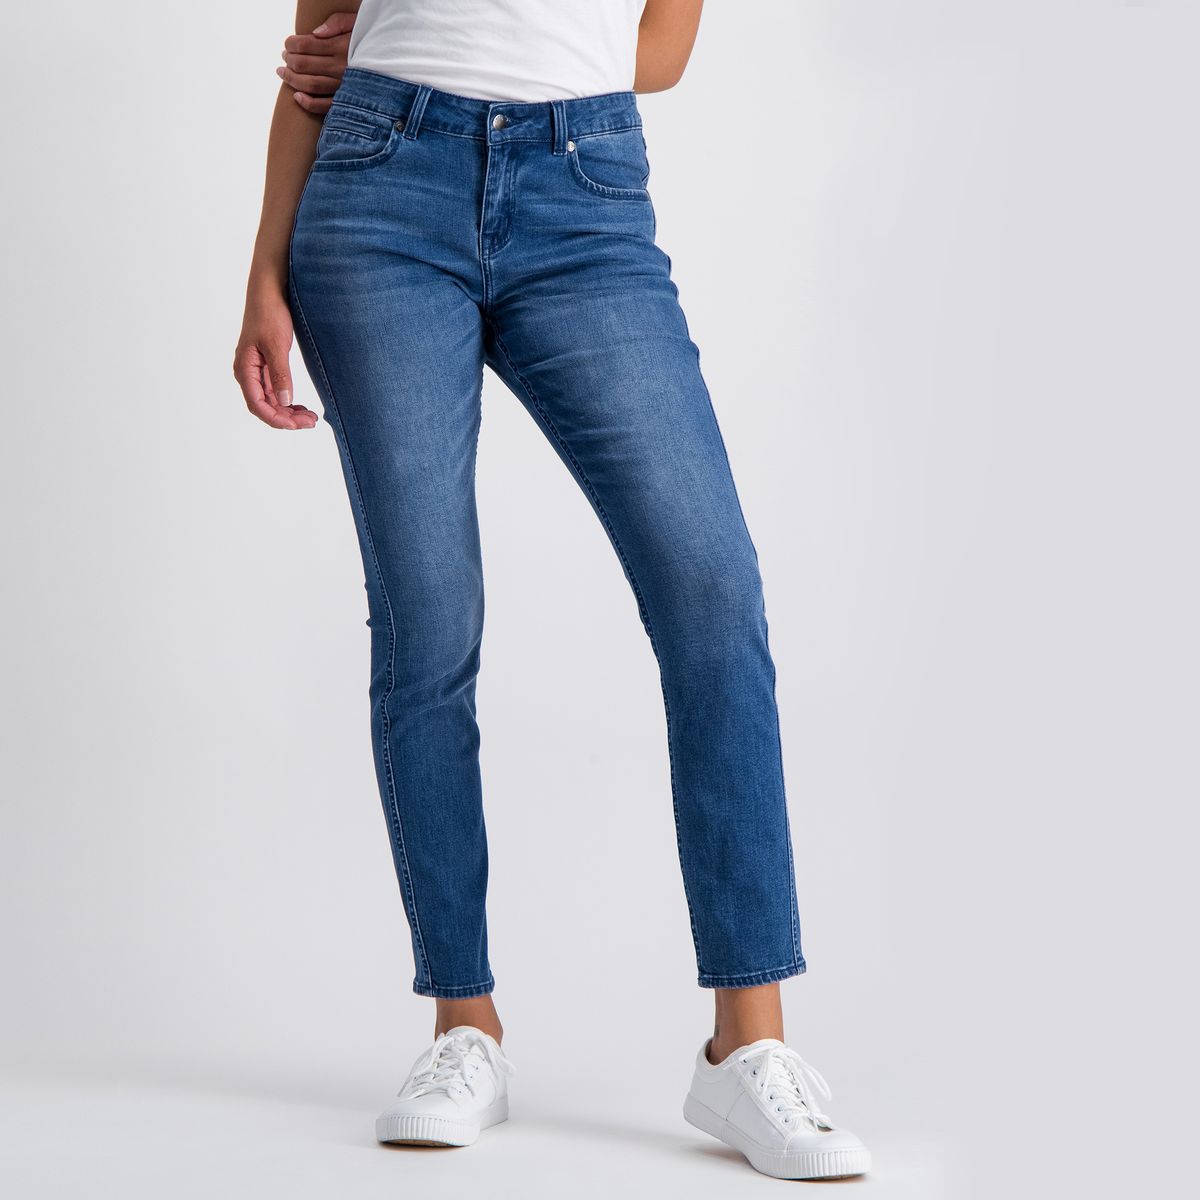 Jeep Ladies Skinny Jeans | Shop Today. Get it Tomorrow! | takealot.com